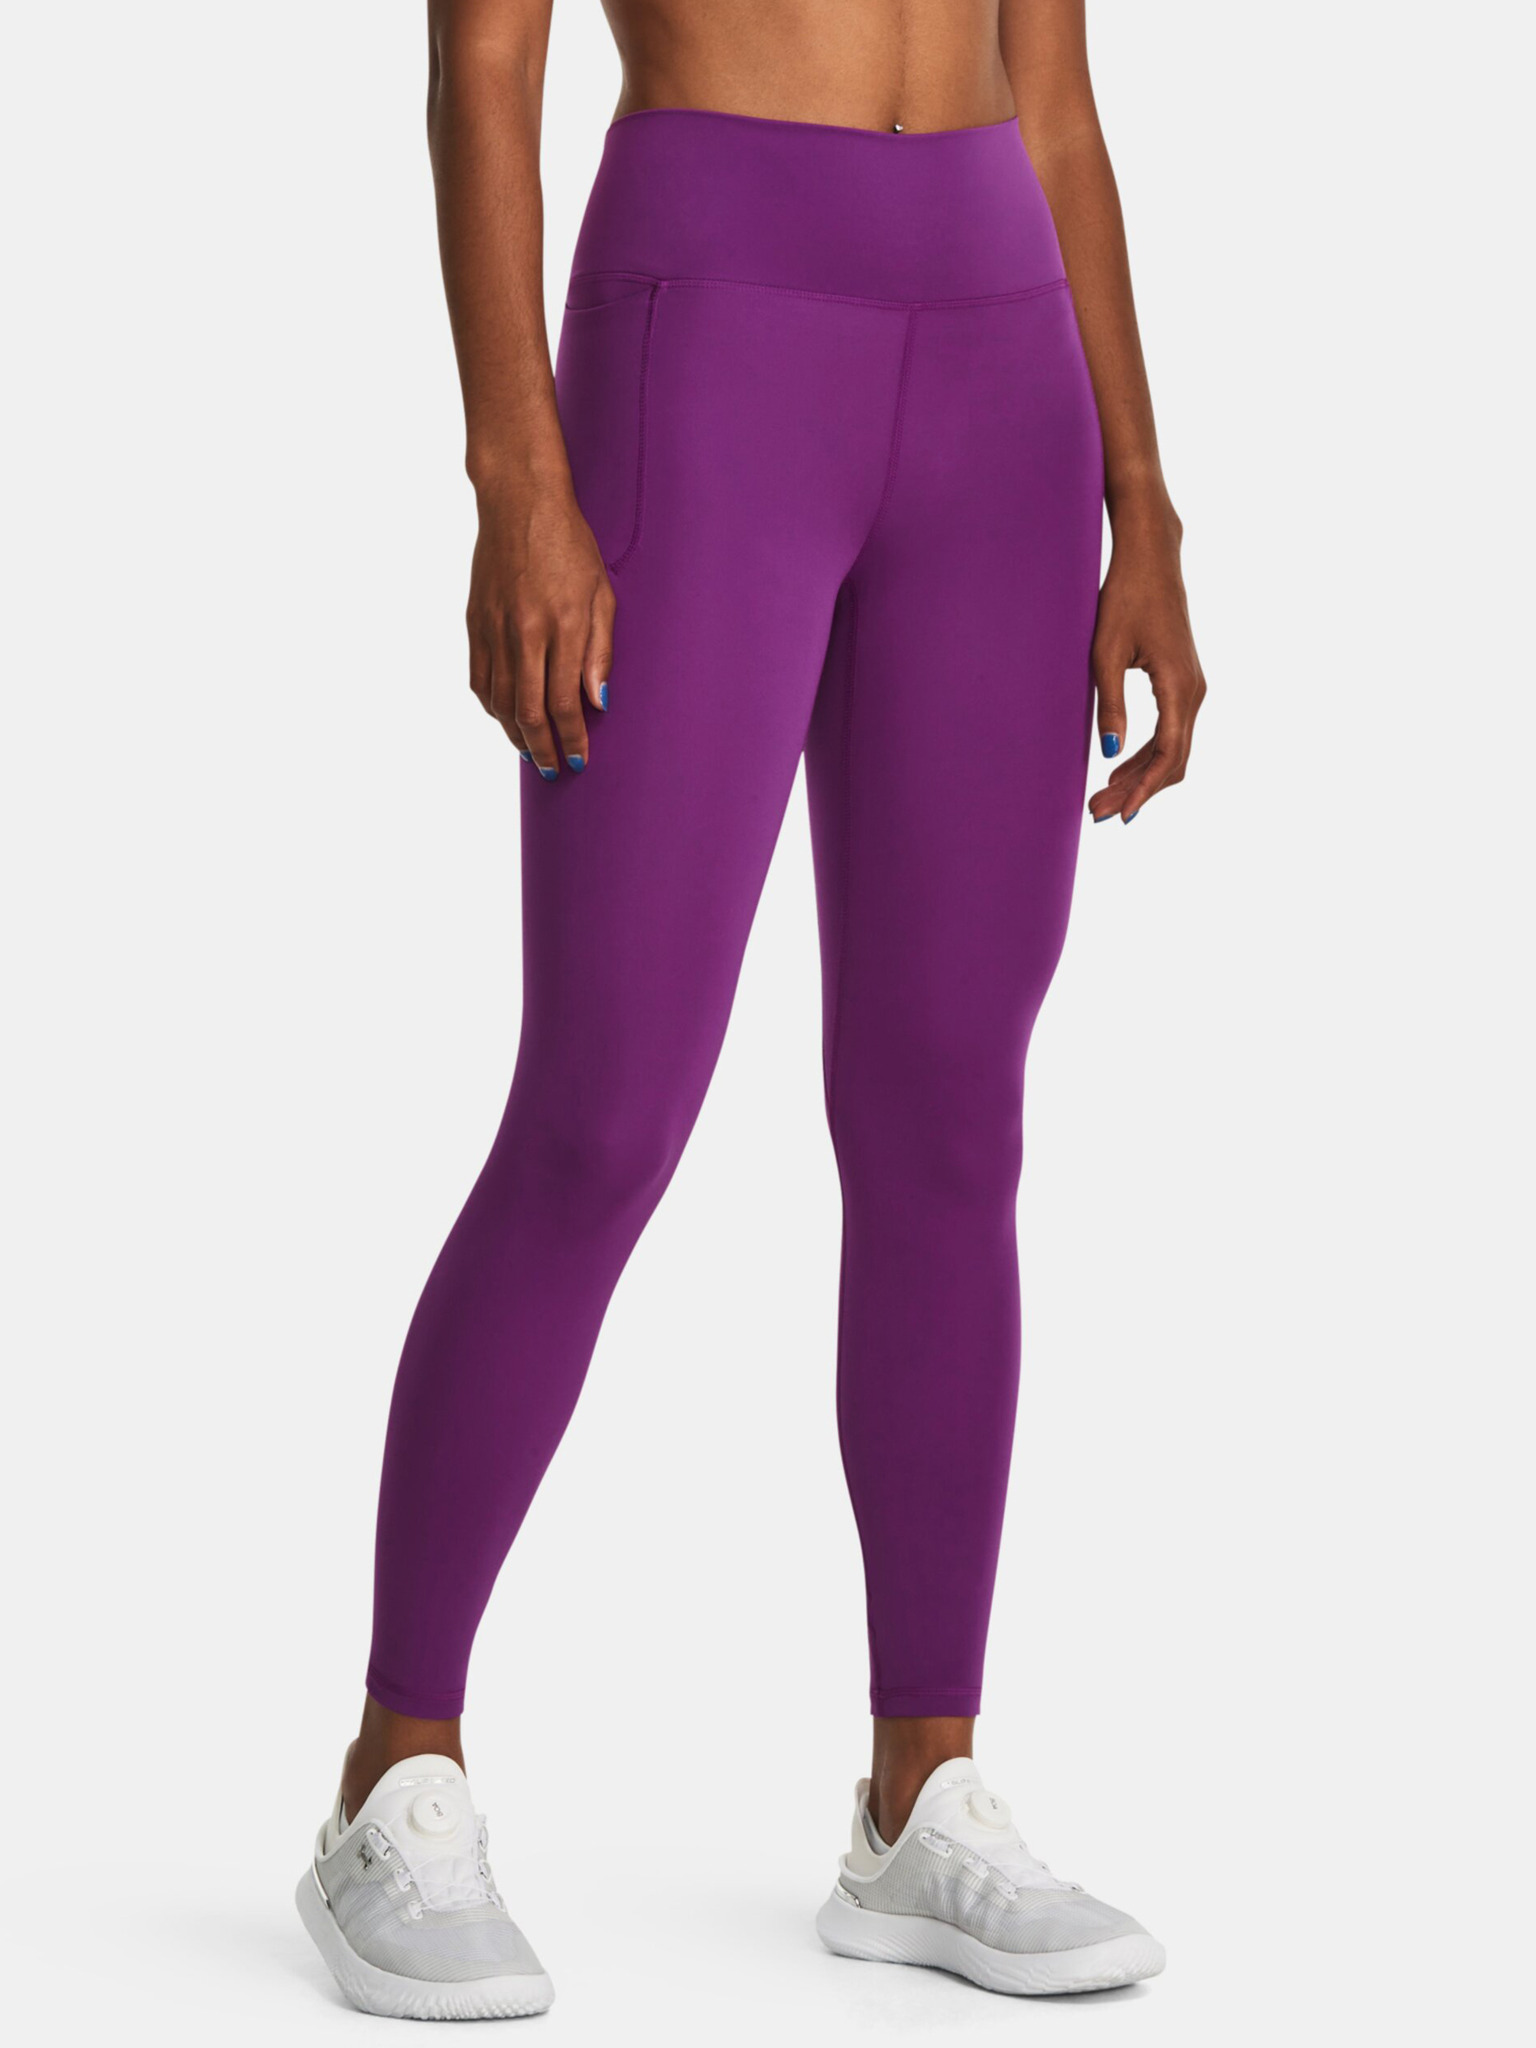  Meridian Ankle Leg, purple - women's leggings